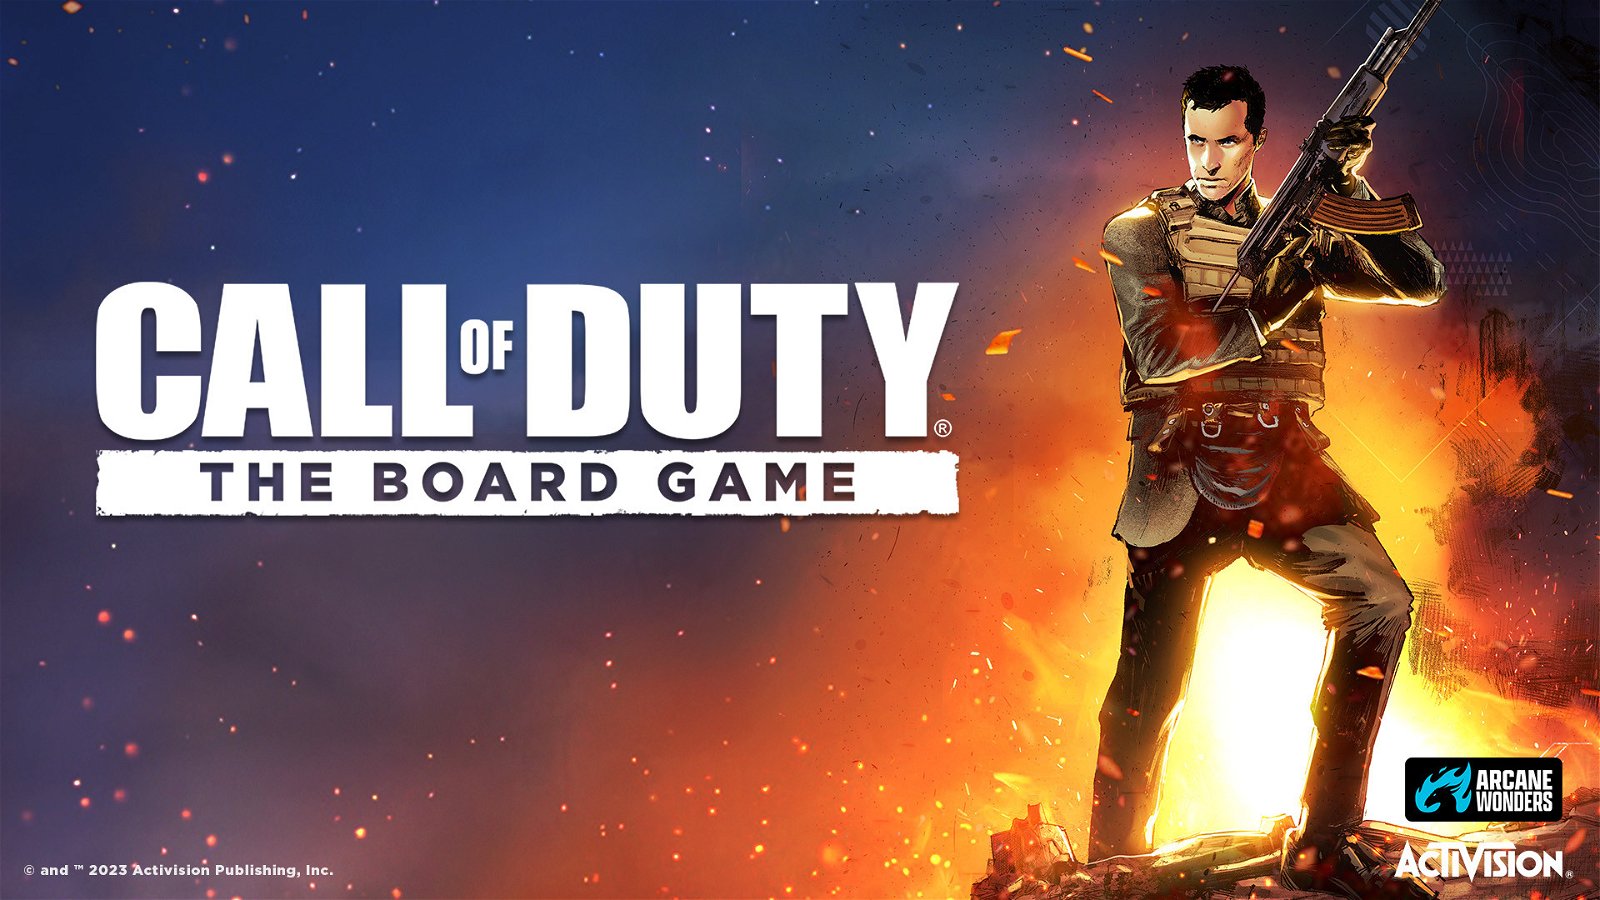 Call of Duty diventa un board game, a sorpresa